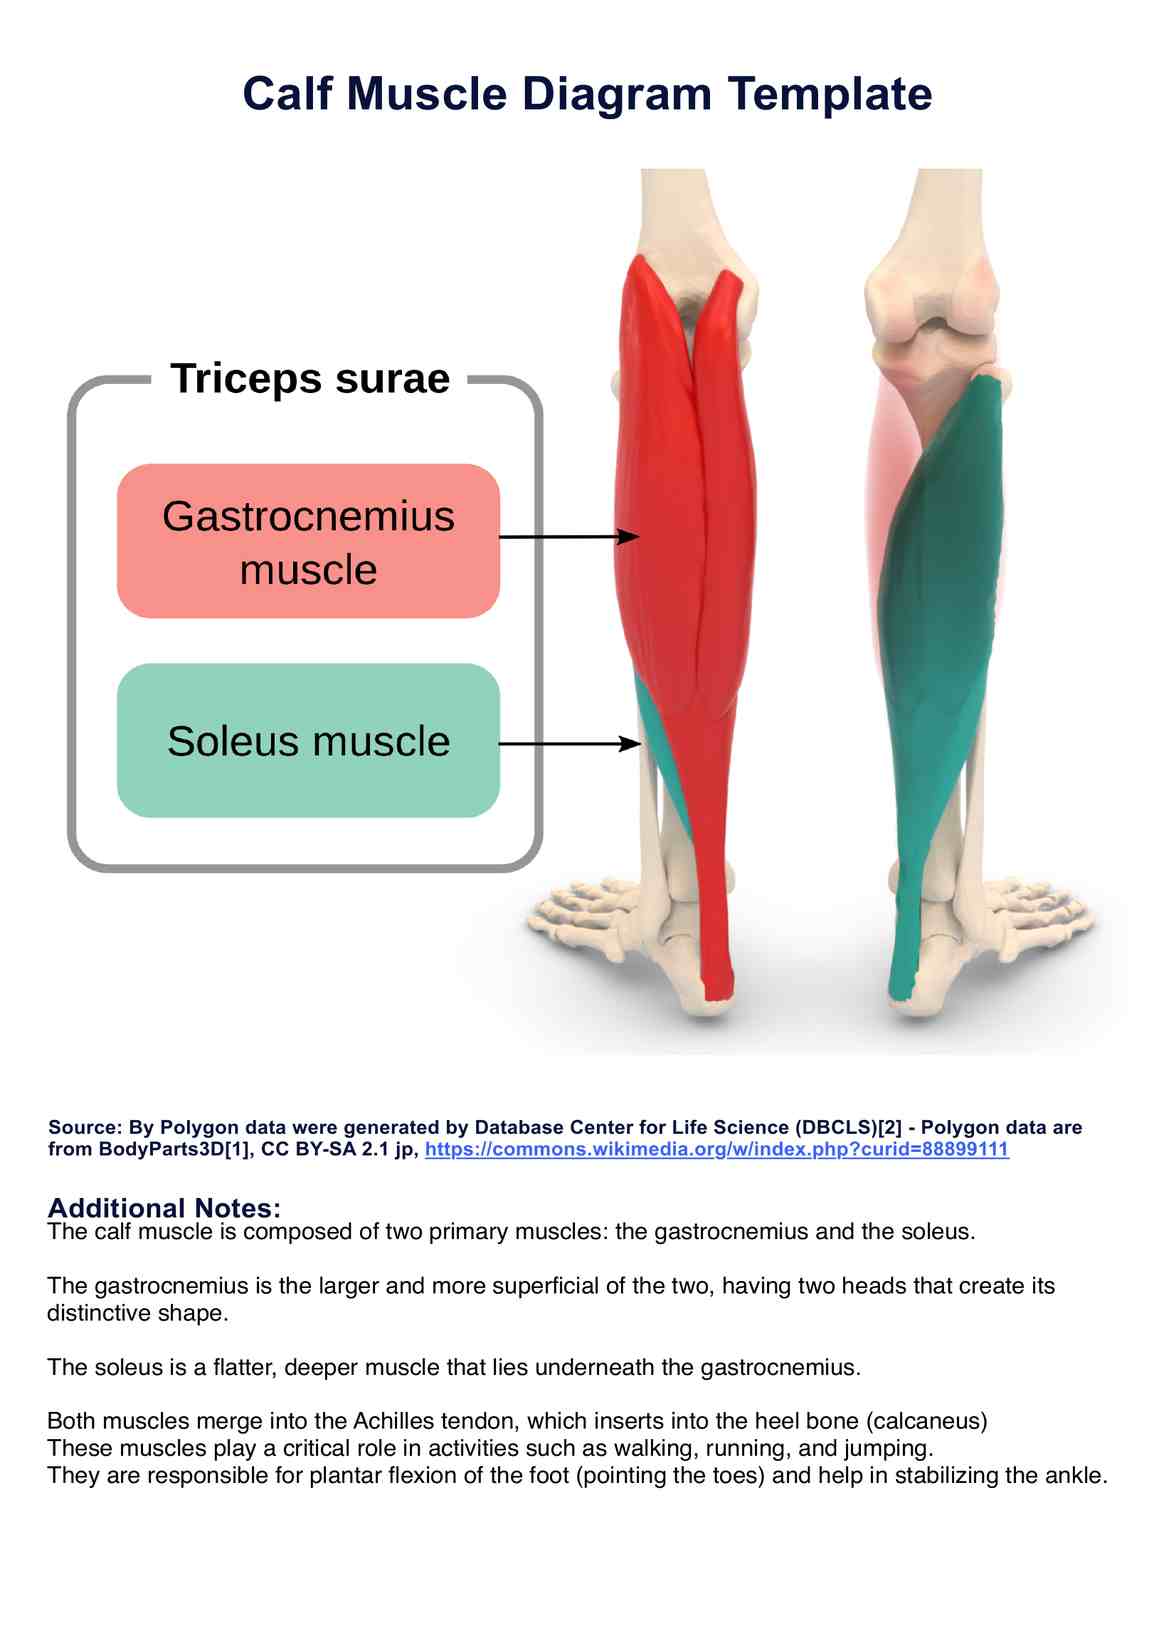 Calf Muscle Diagram PDF Example